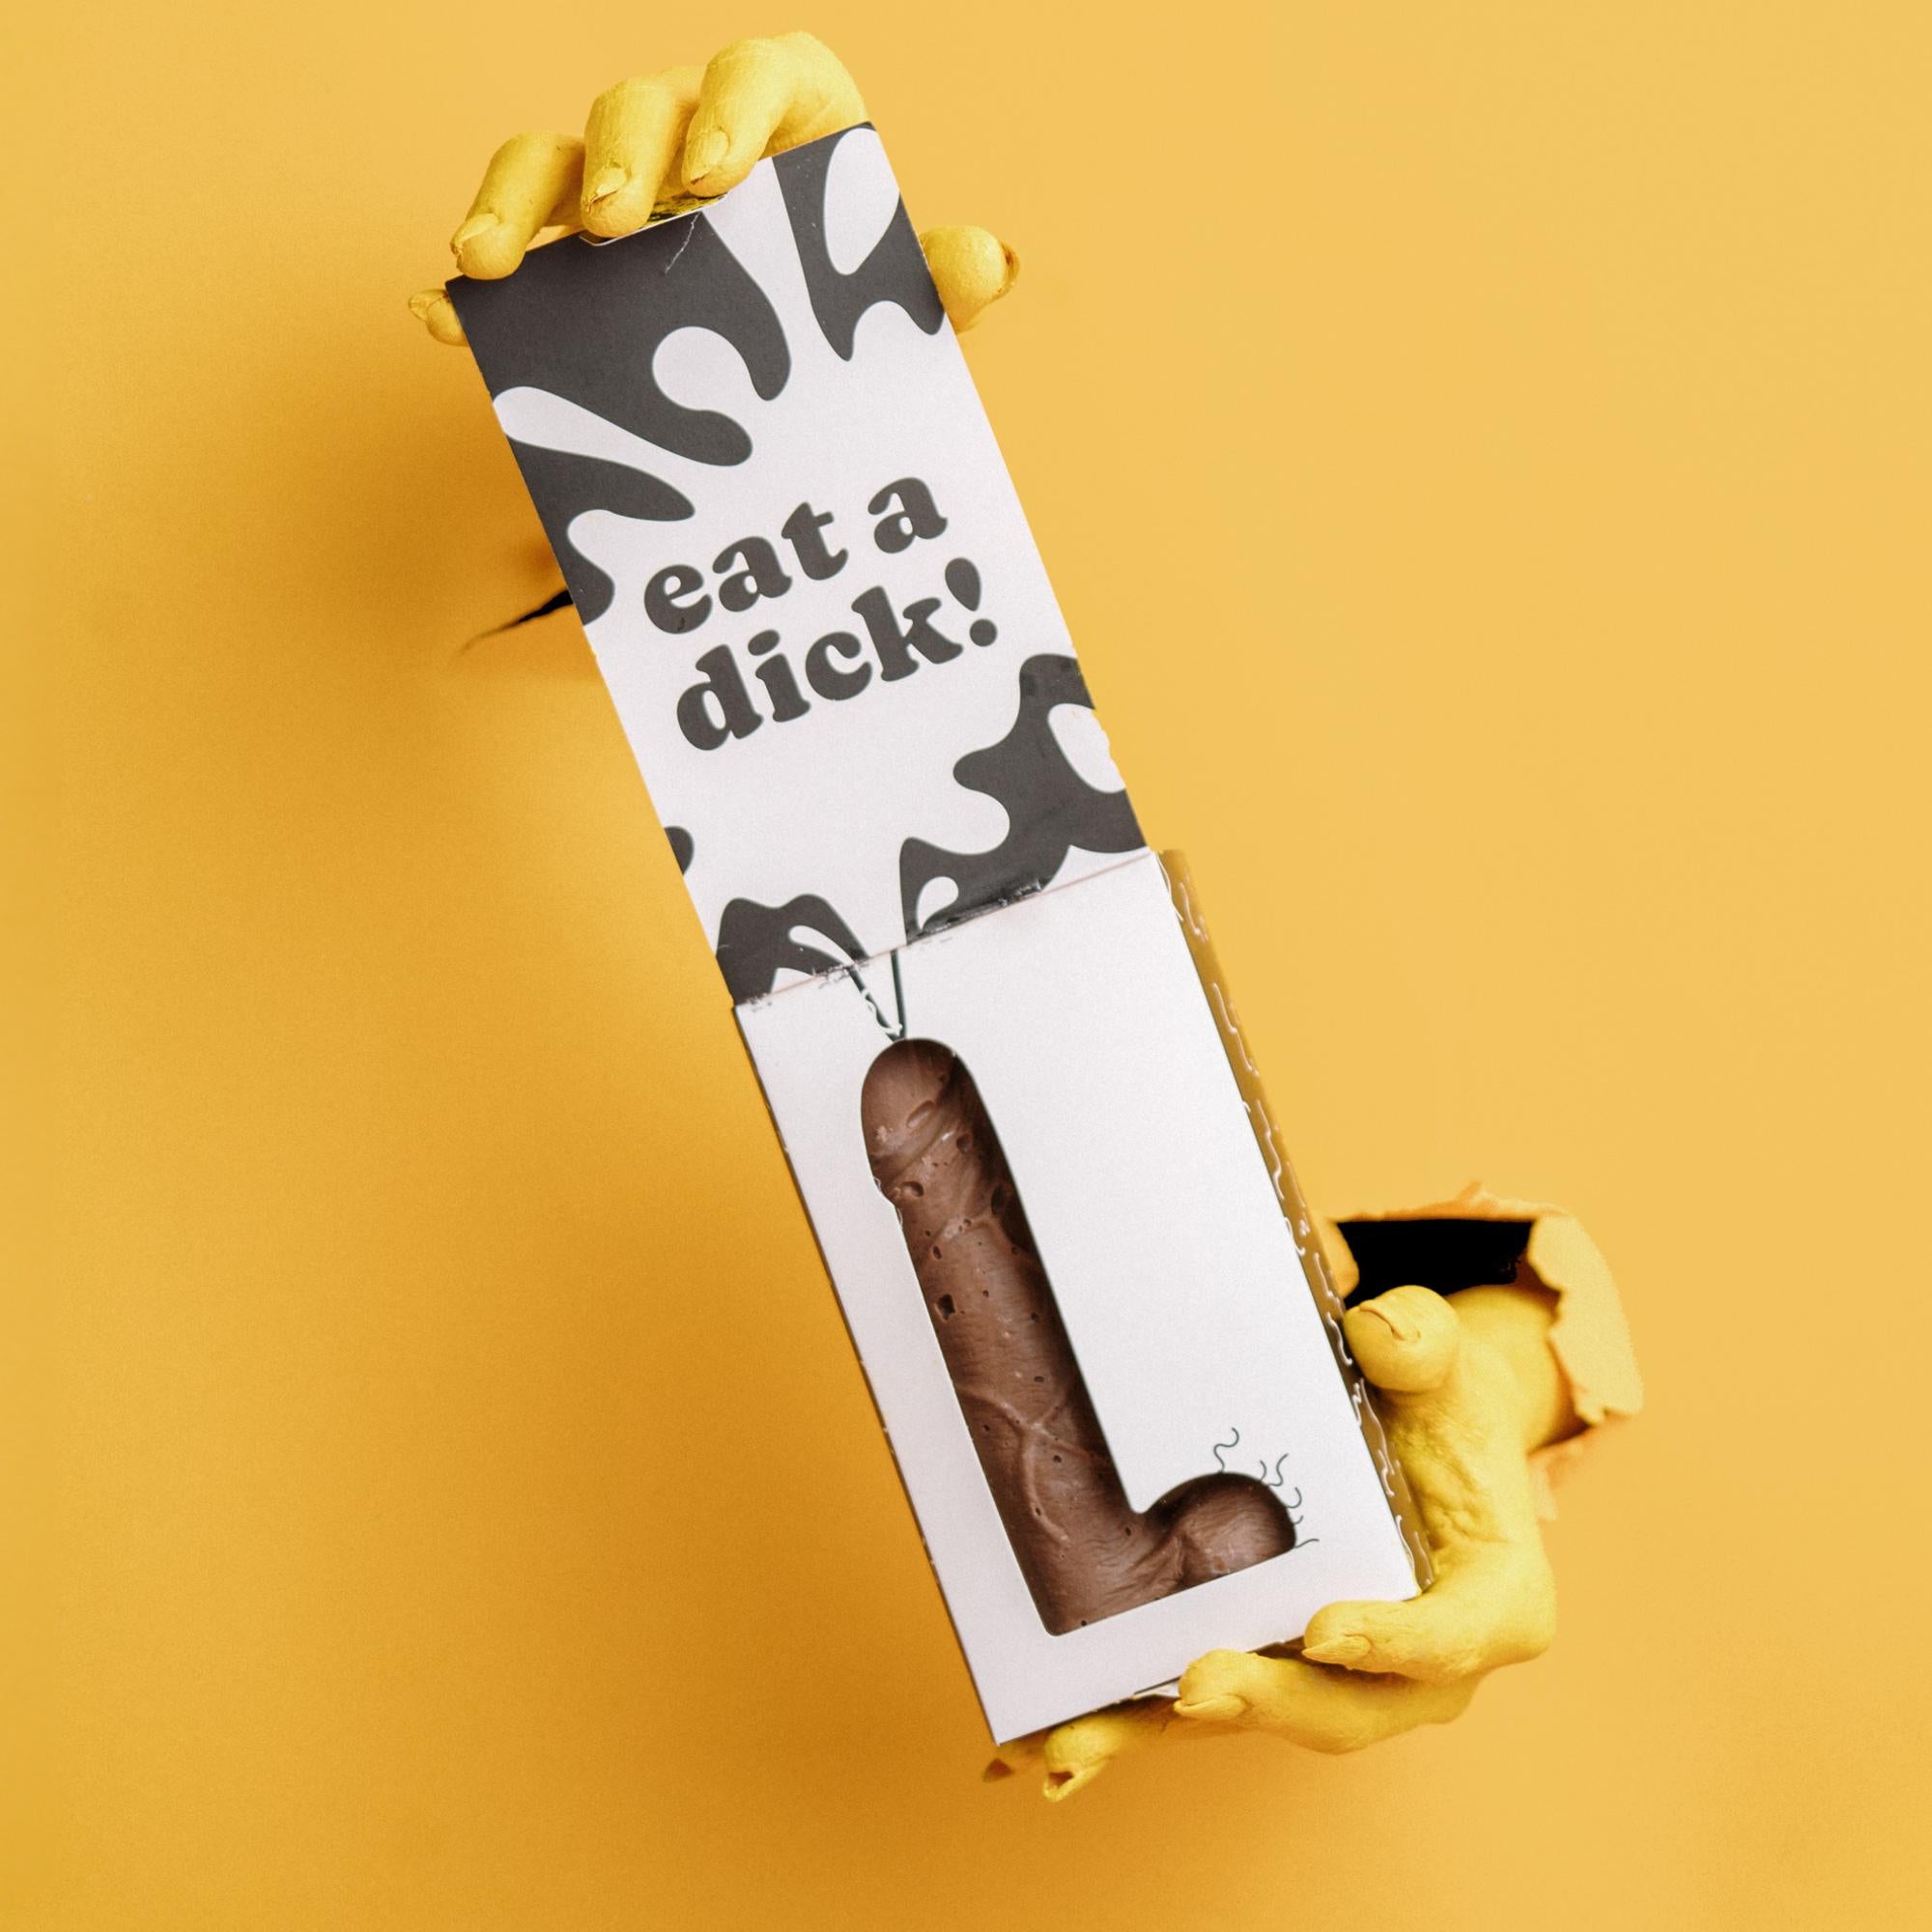 Trump Box - Eat A Dick